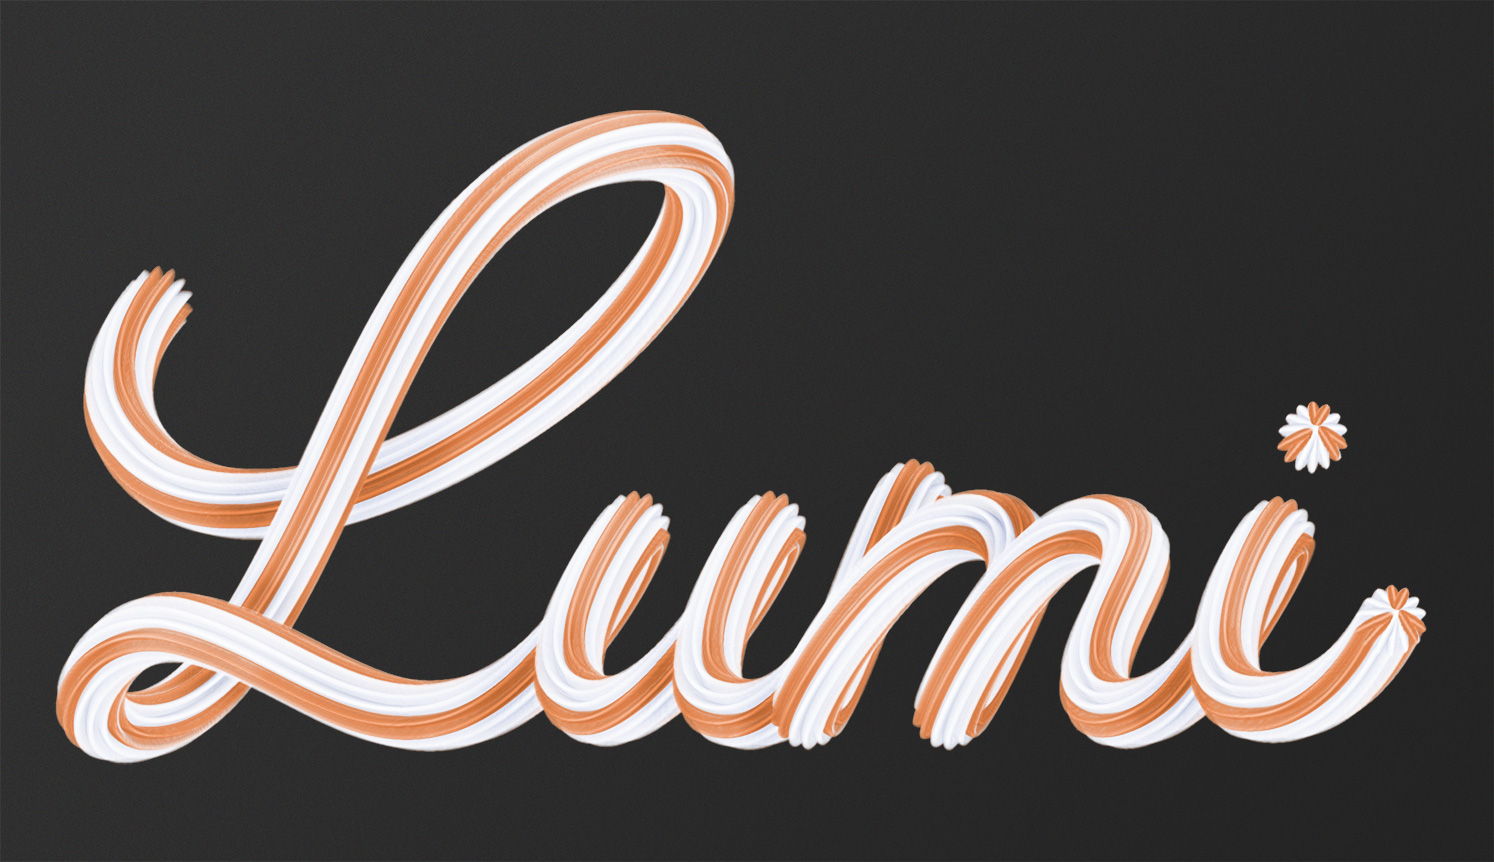 lumi, written in orange and white striped toothpaste